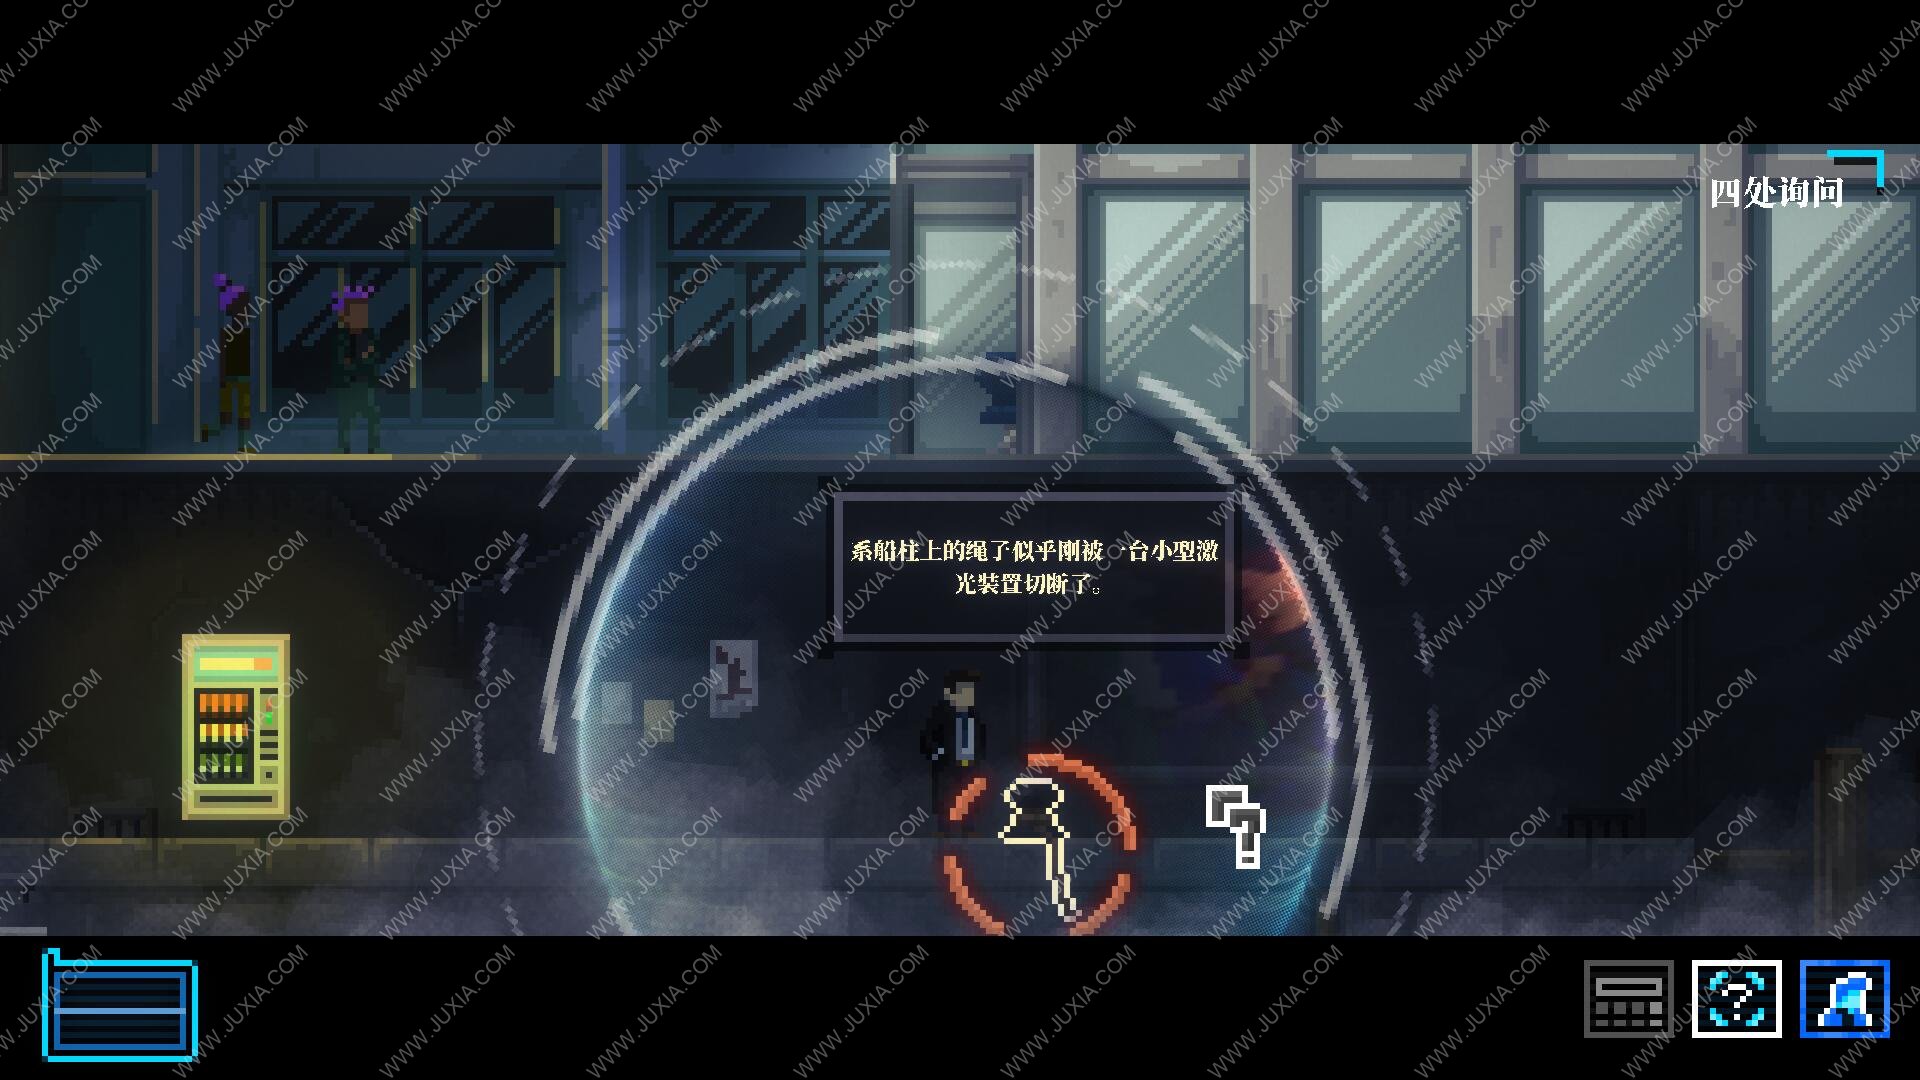 Lacuna攻略数字键盘密码 黑暗科幻冒险游戏第四部分攻略